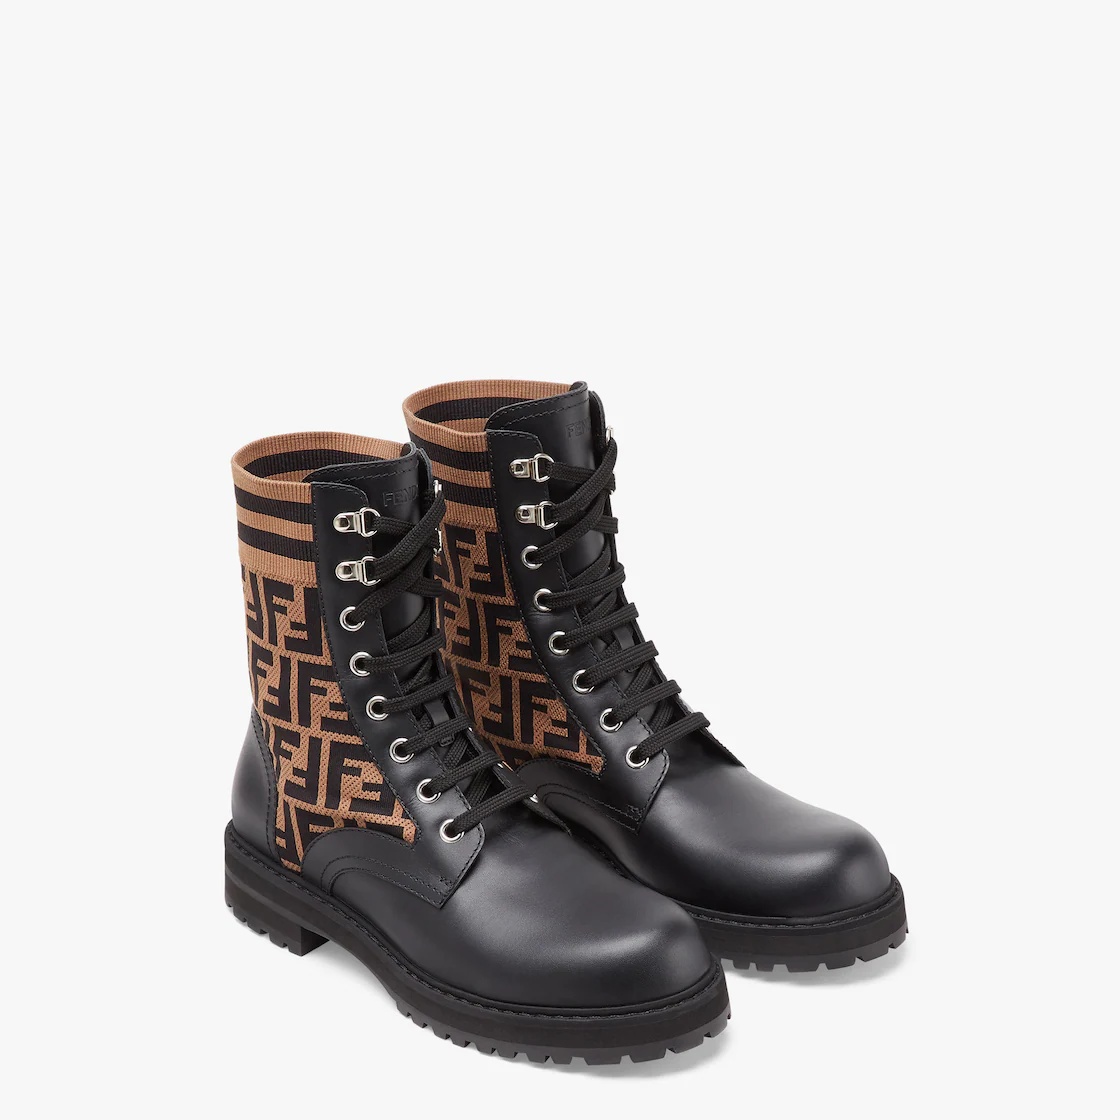 Black leather biker boots - 4